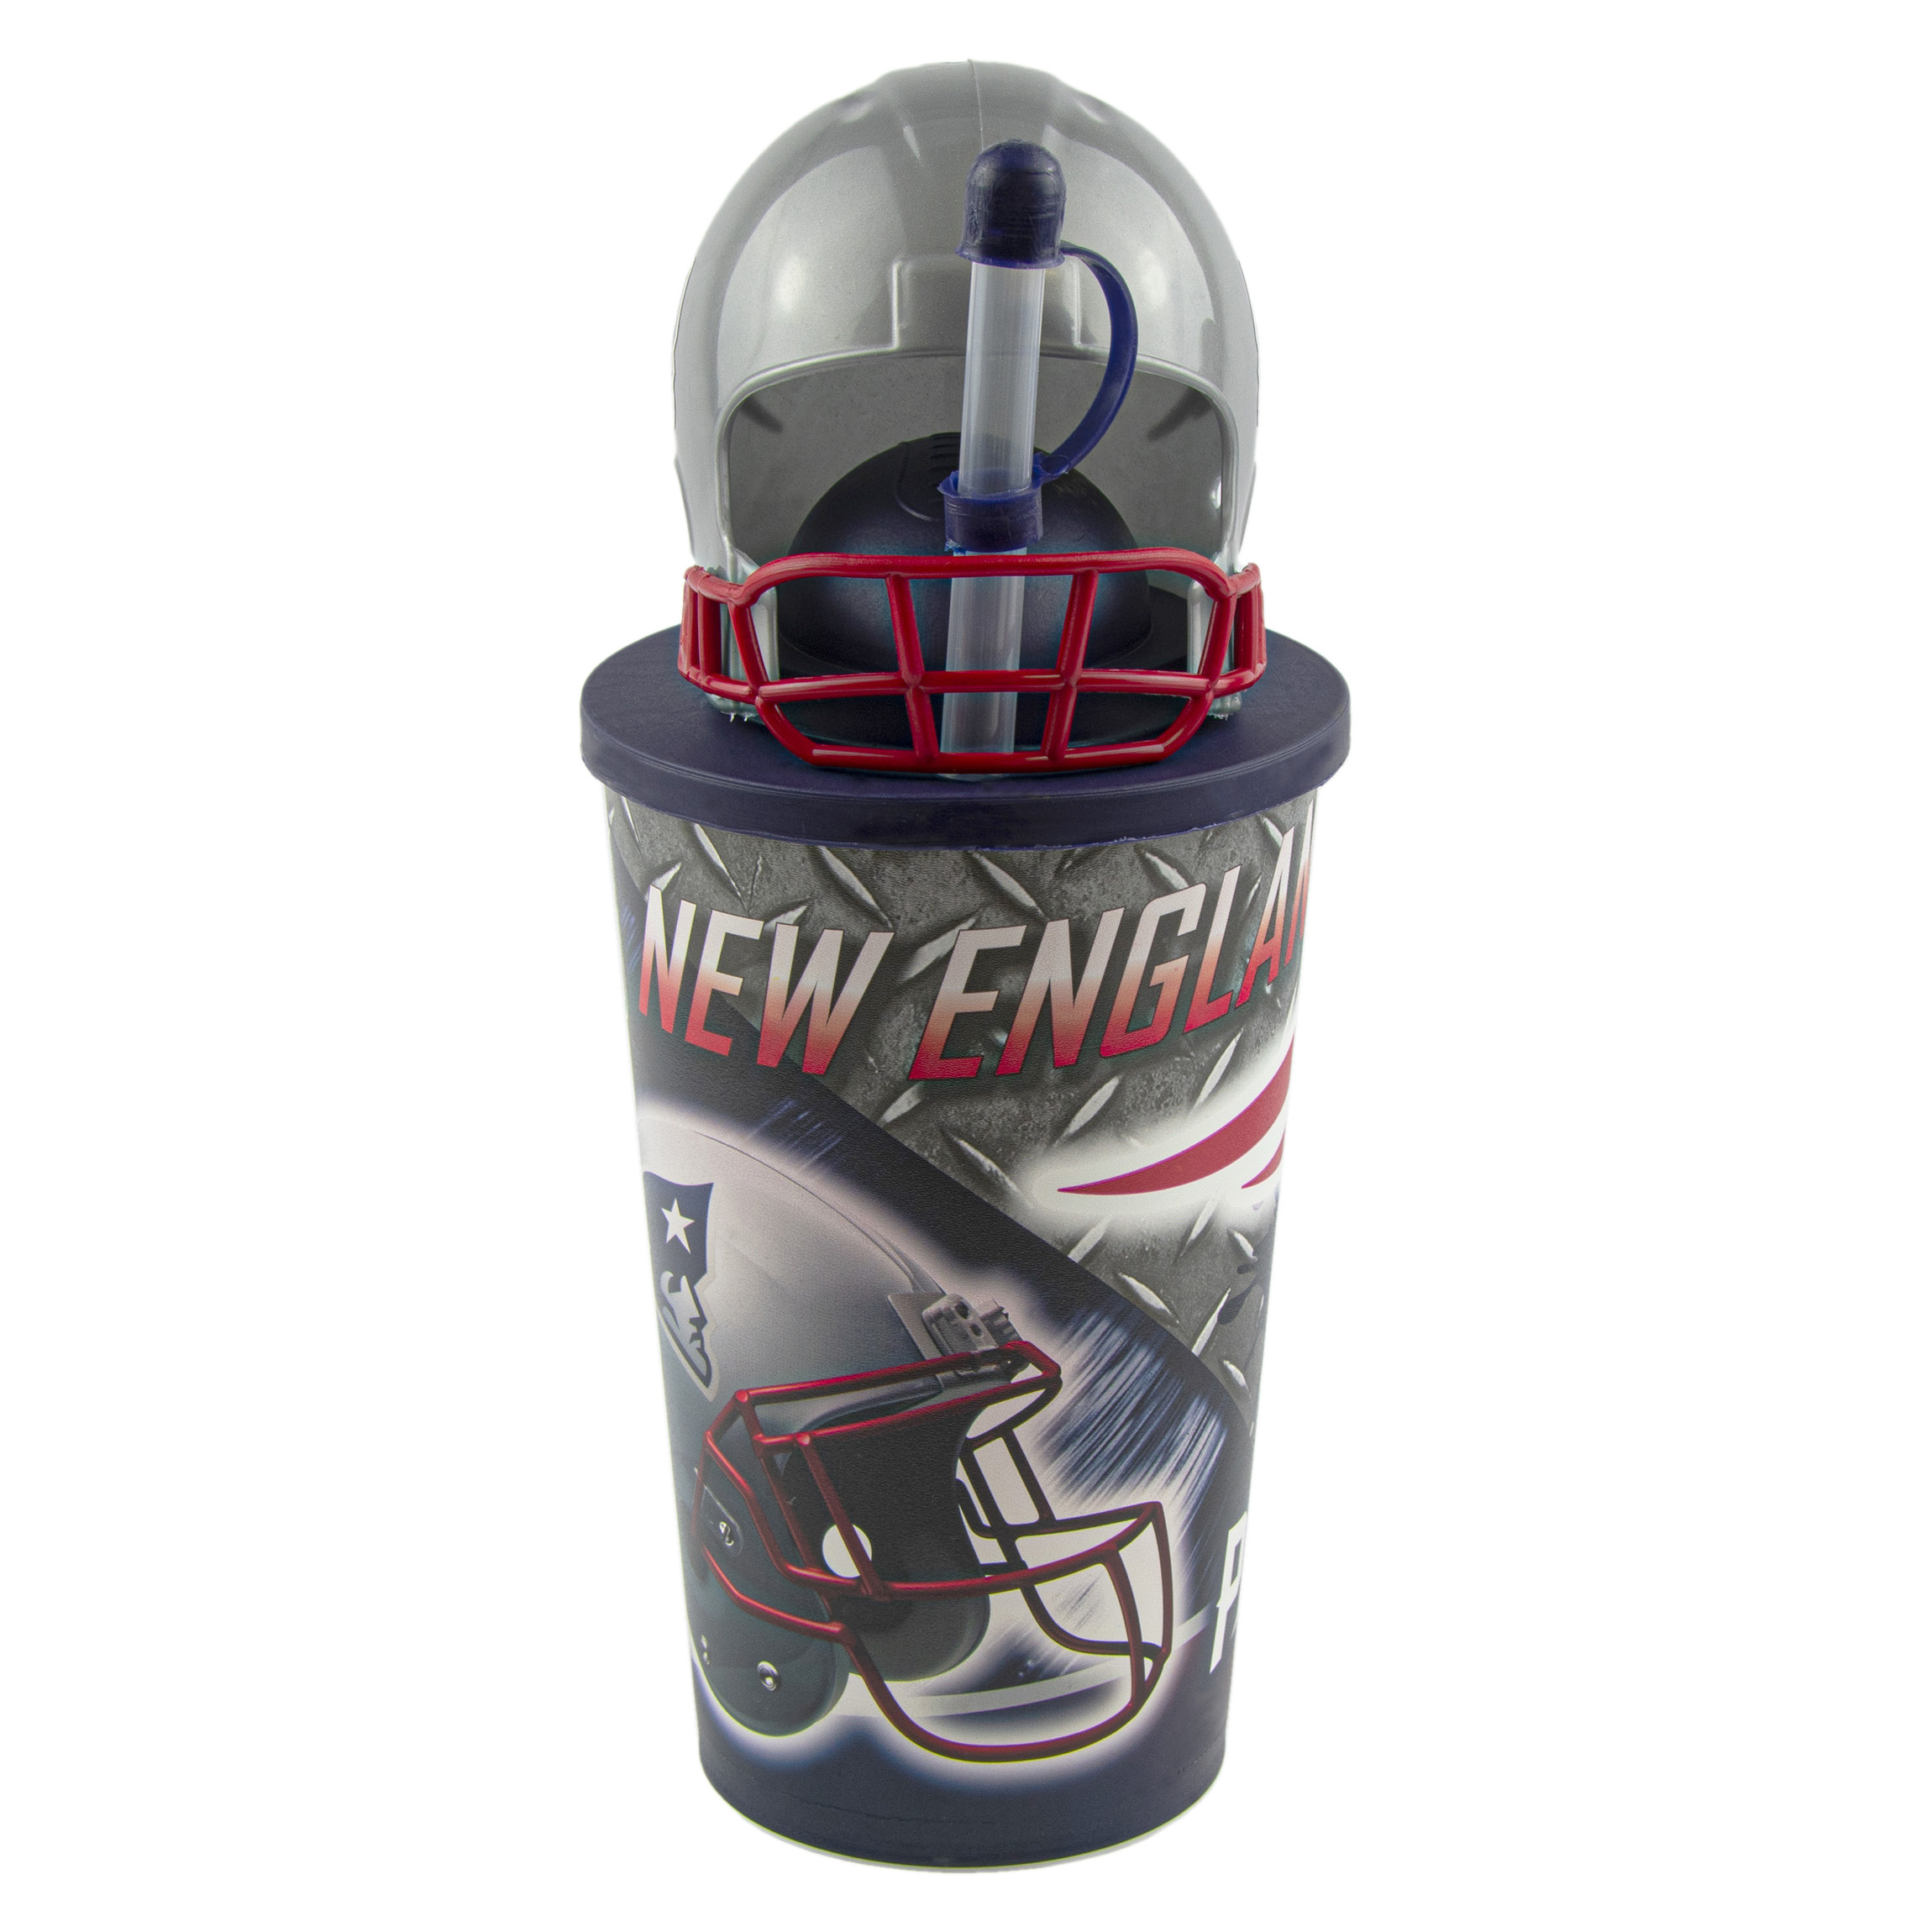 NFL New England Patriots Helmet Plastic Cup 32oz with Straw